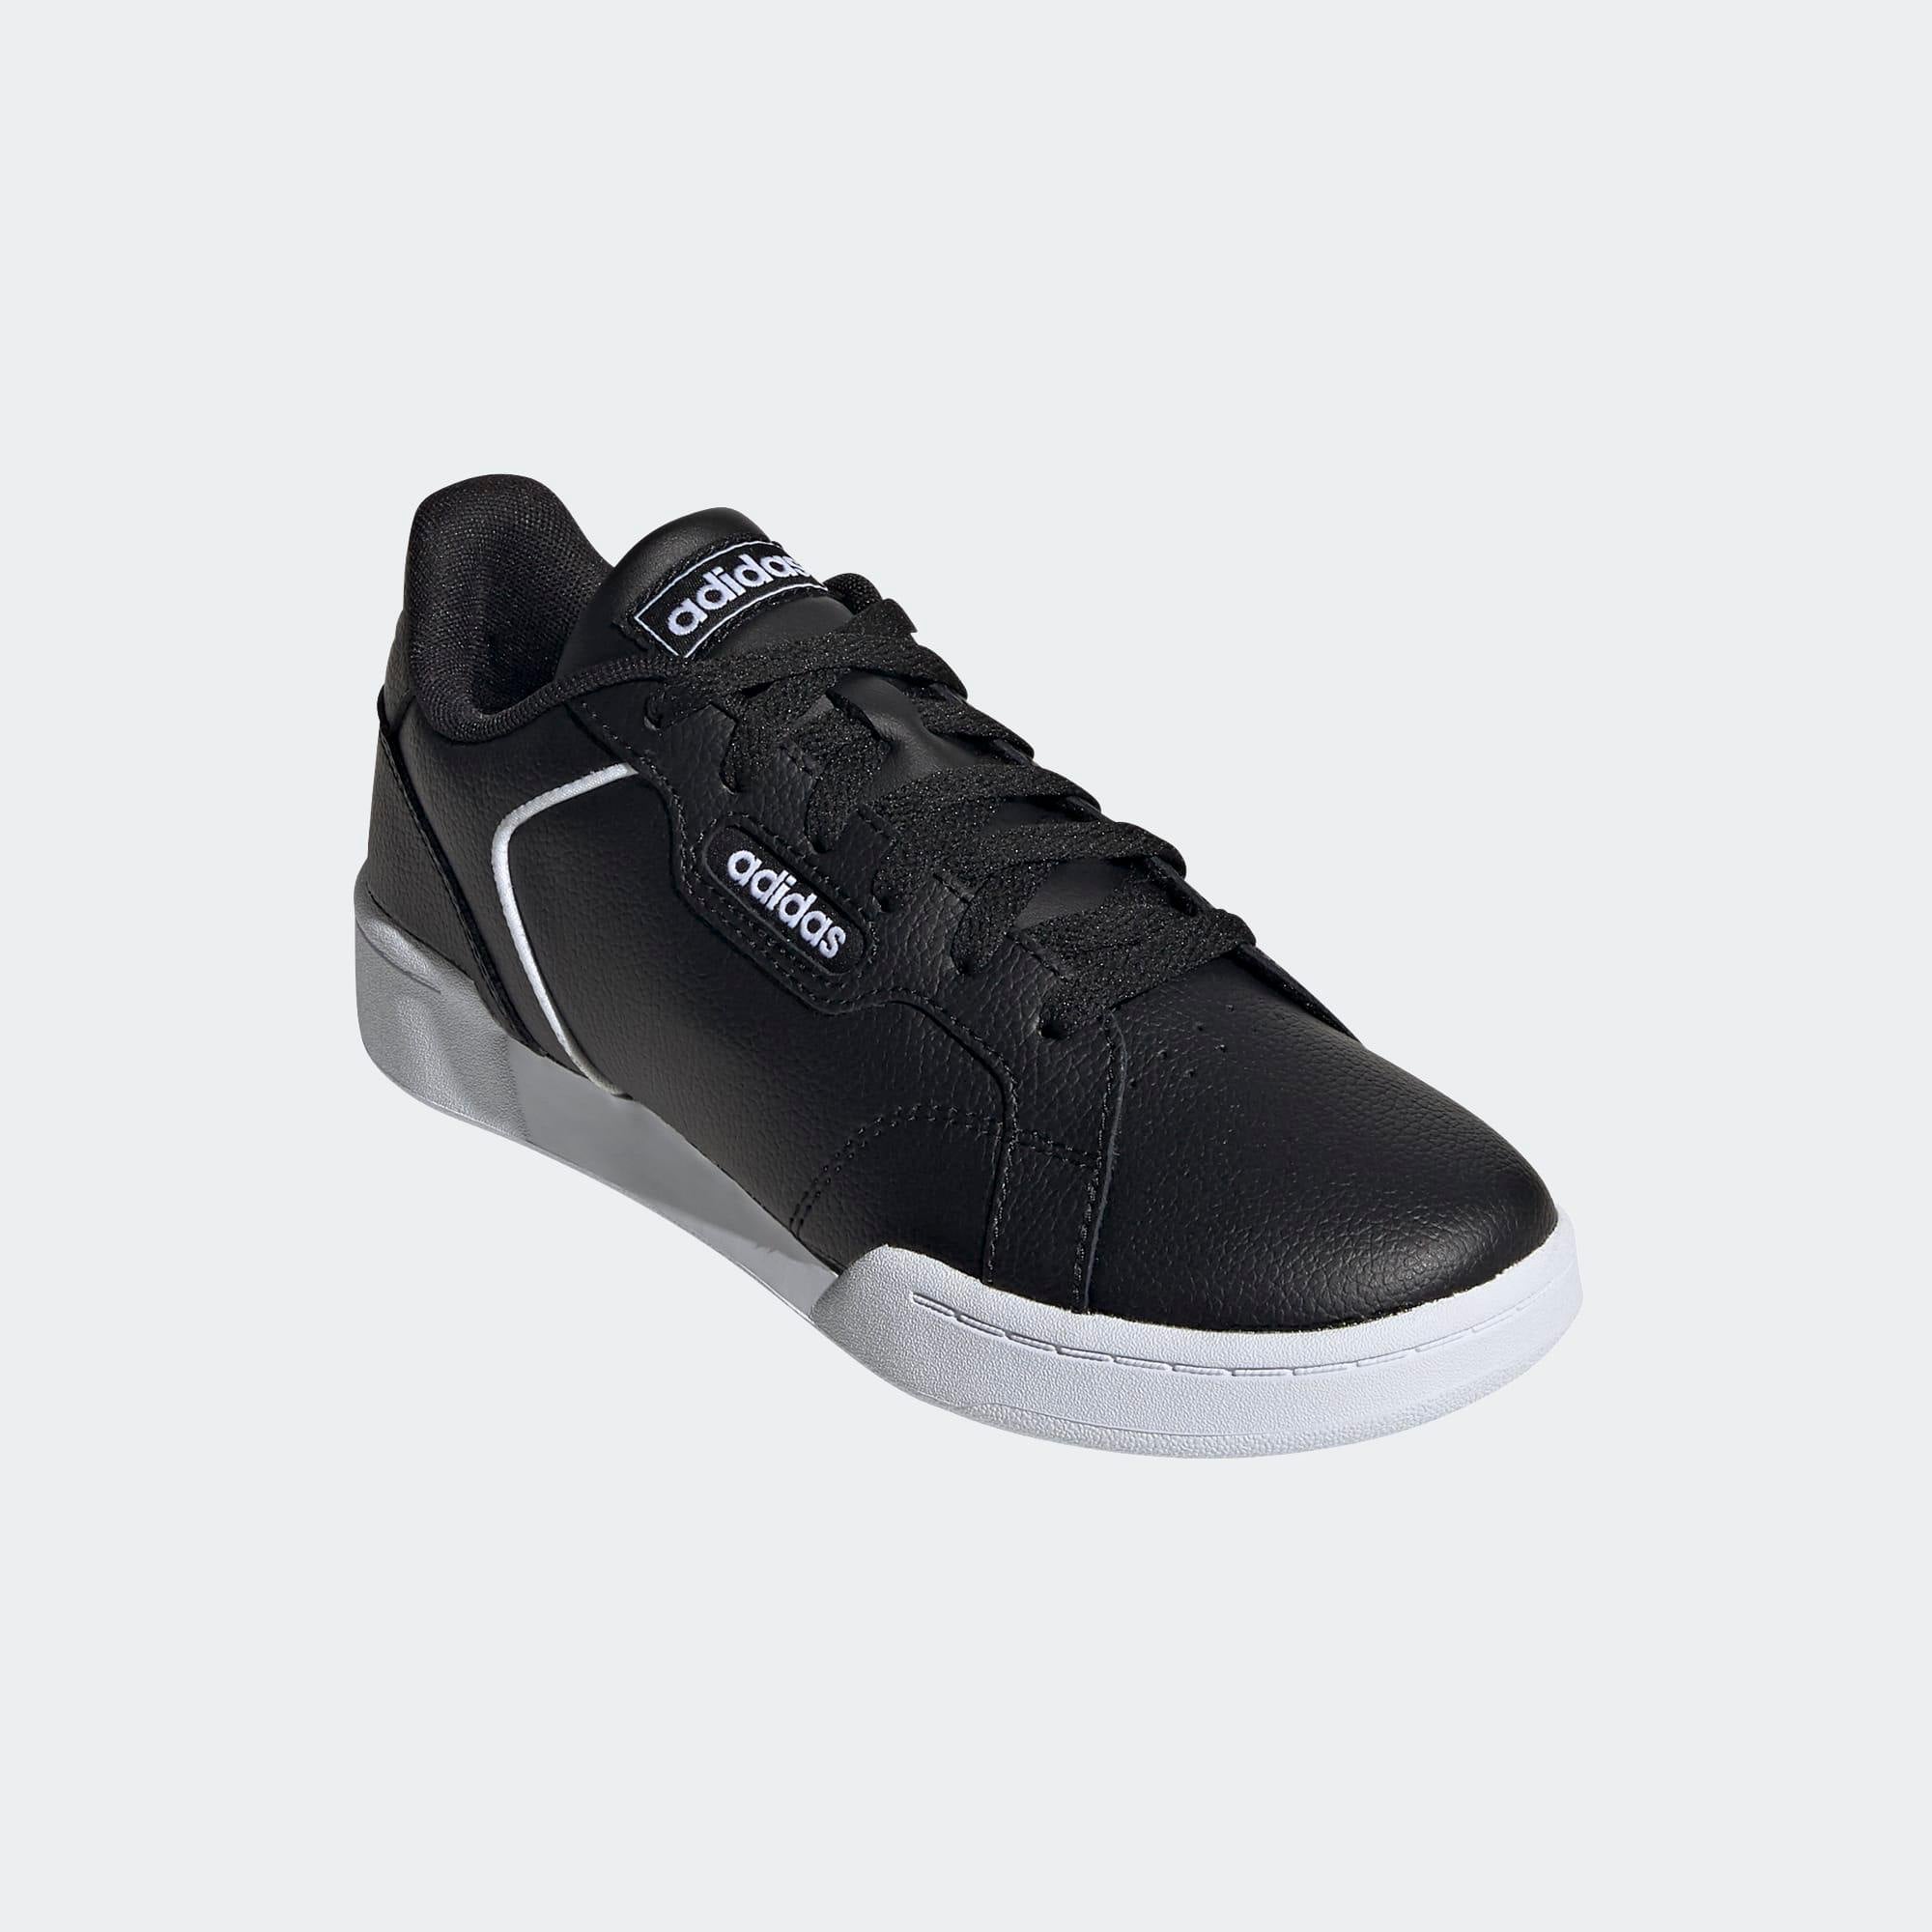 A-D58 (Roguera j black/black/ftwht) 72094095 - Otahuhu Shoes